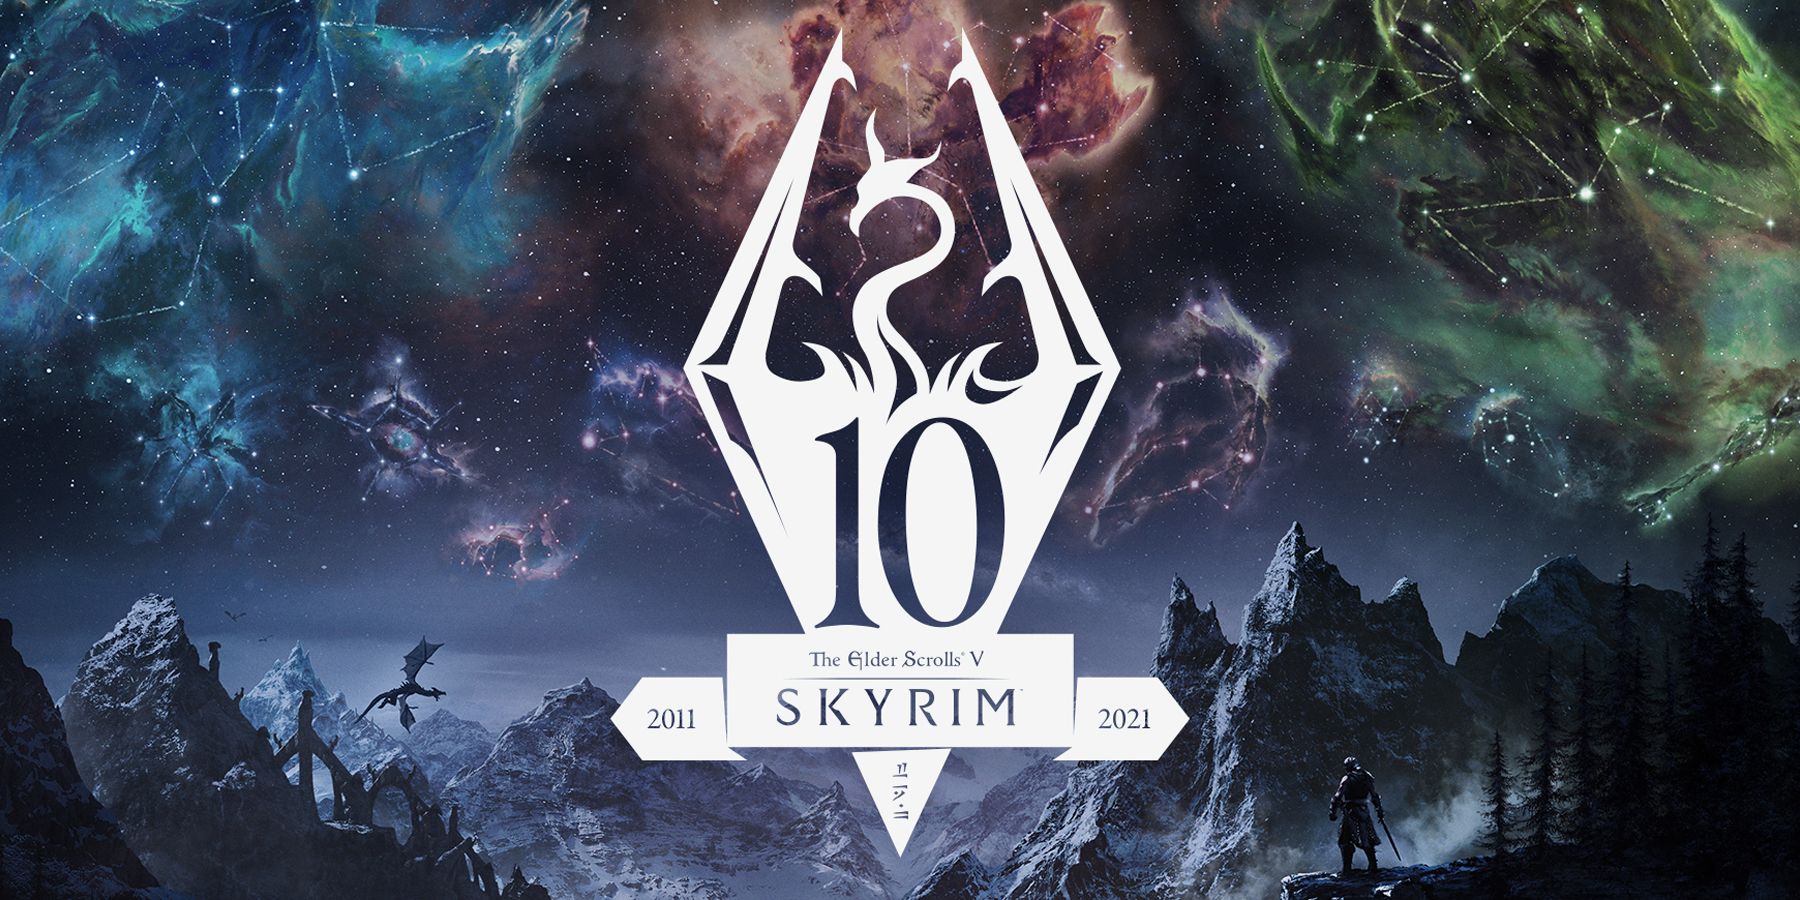 Skyrim 10th Anniversary Constellation Graphic